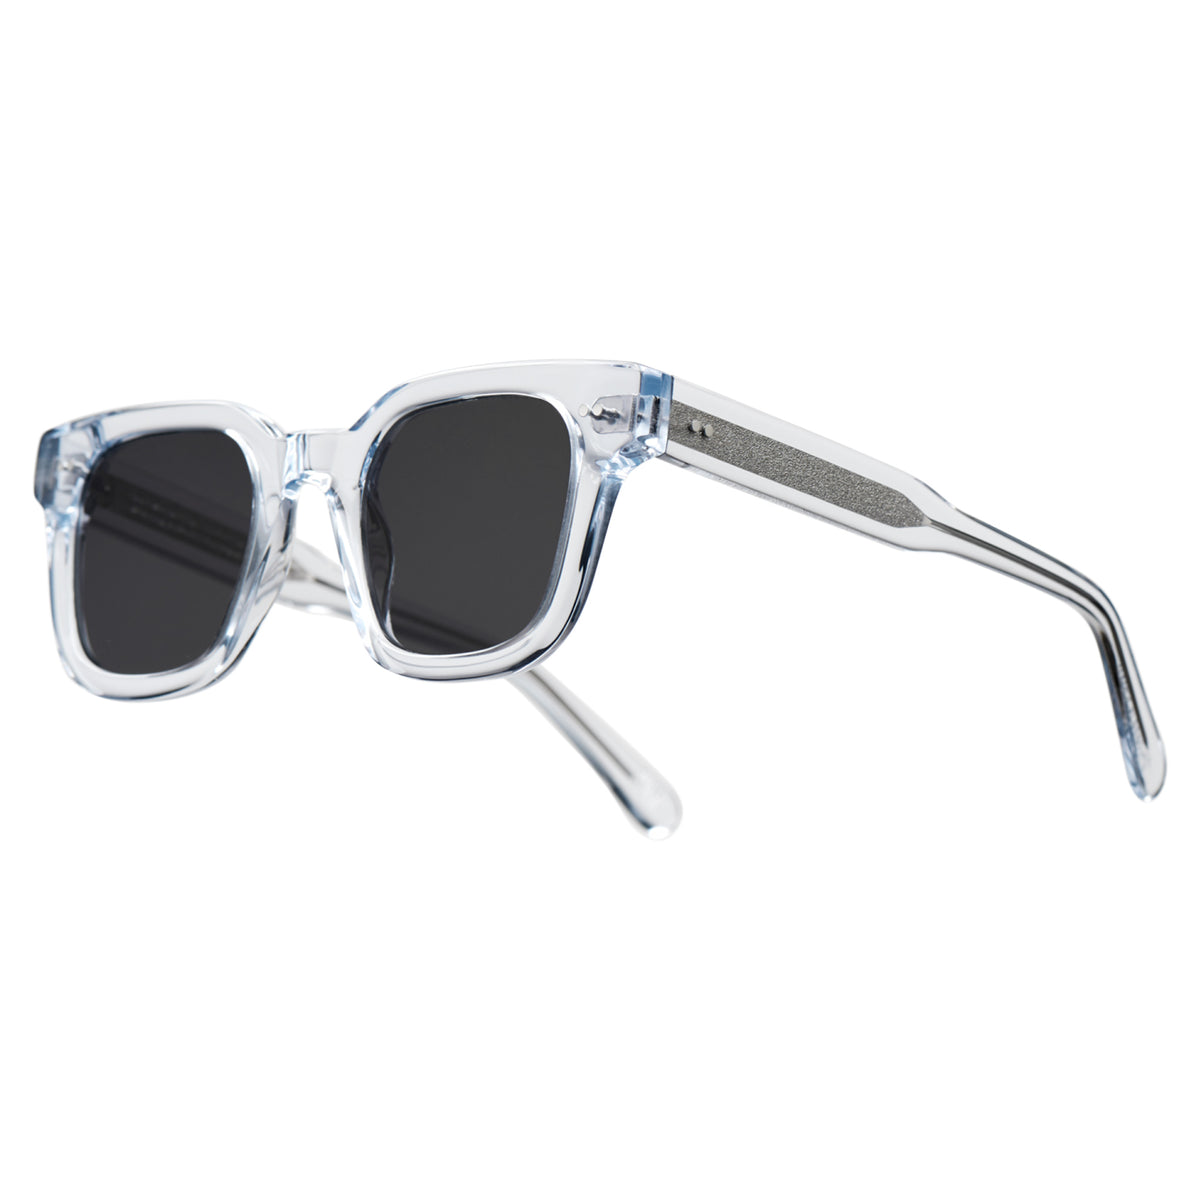 Chimi 004 Litchi Black Sunglasses Eyewear Angle